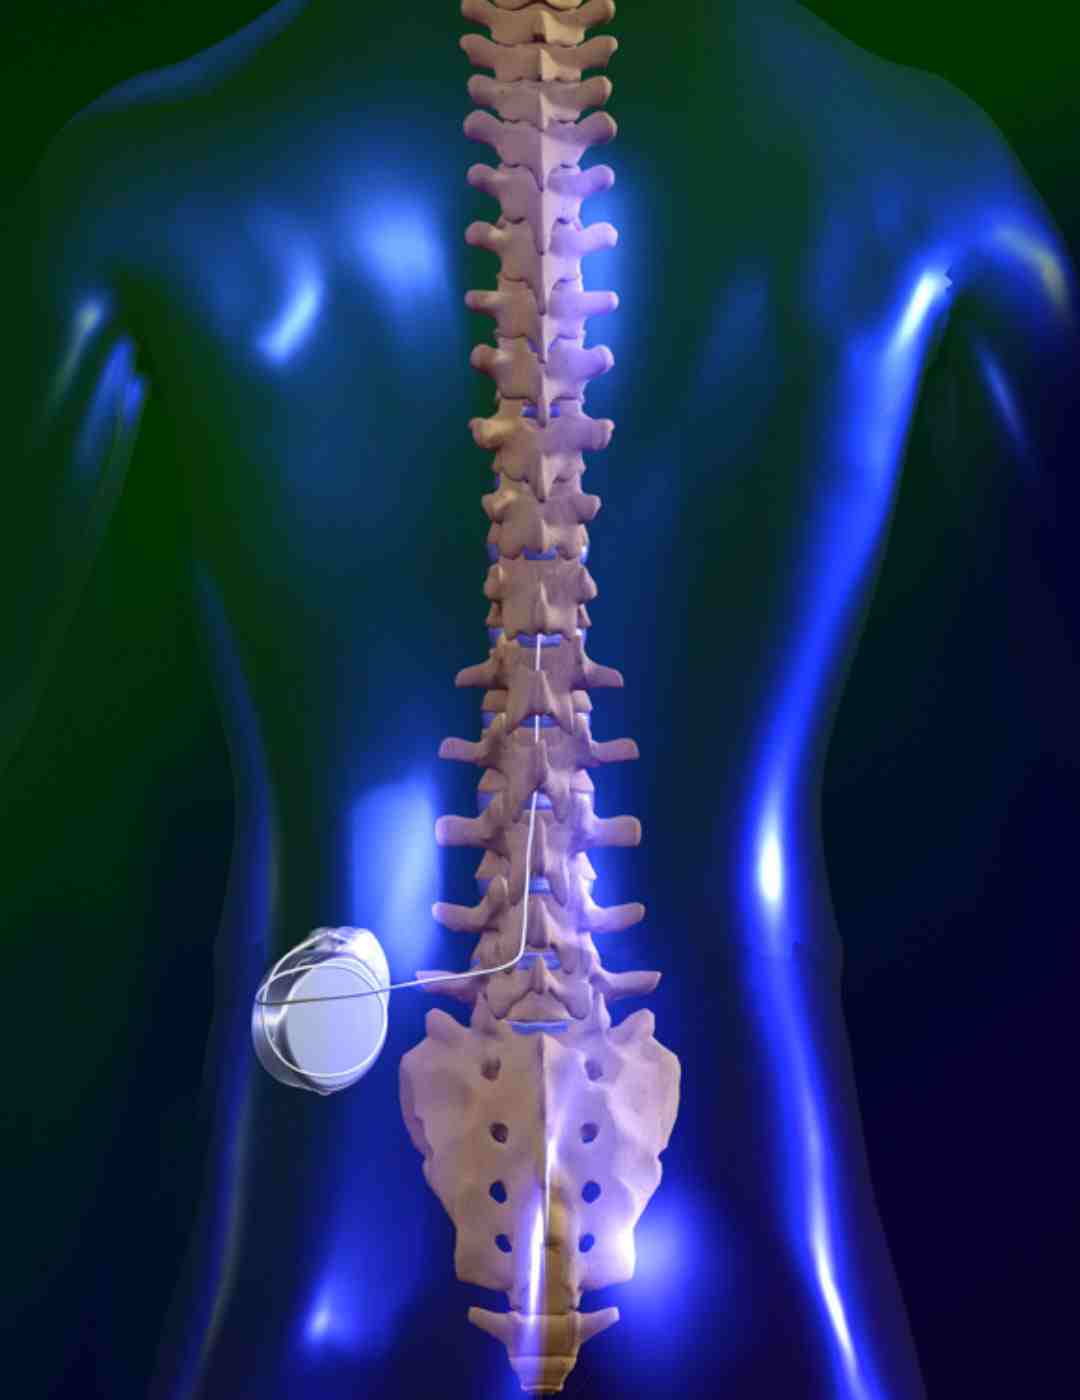 abbott spinal cord stimulator lead location